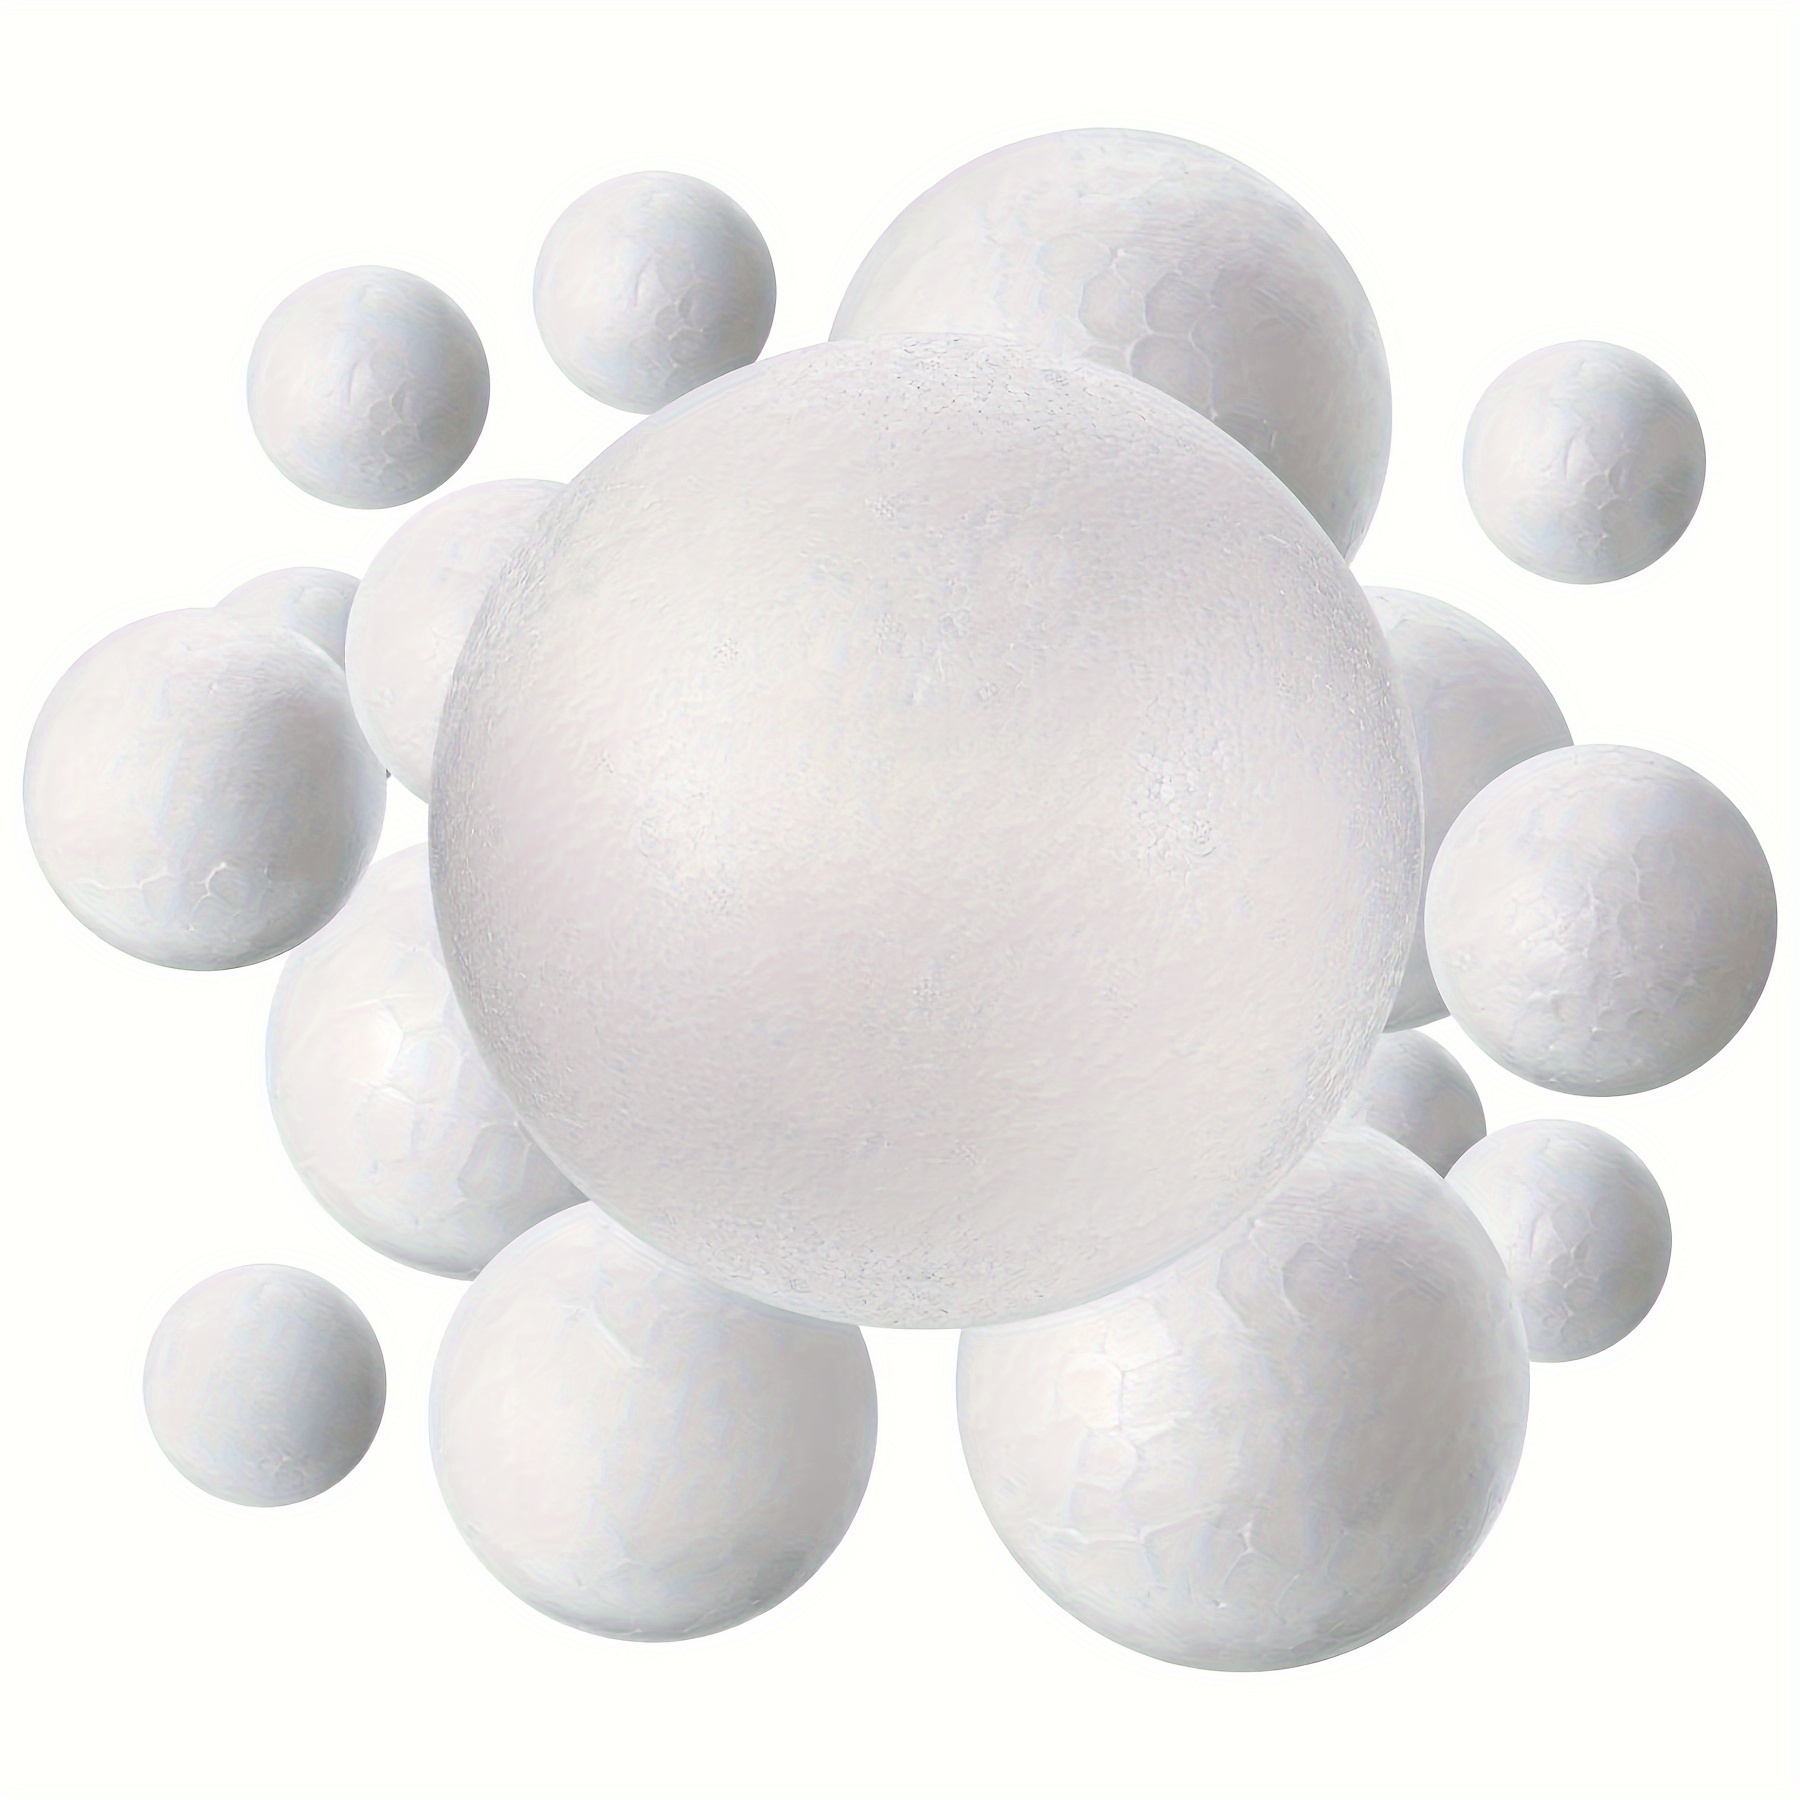 10X White Foam Balls Spheres 3 inch Bulk - Smooth Round